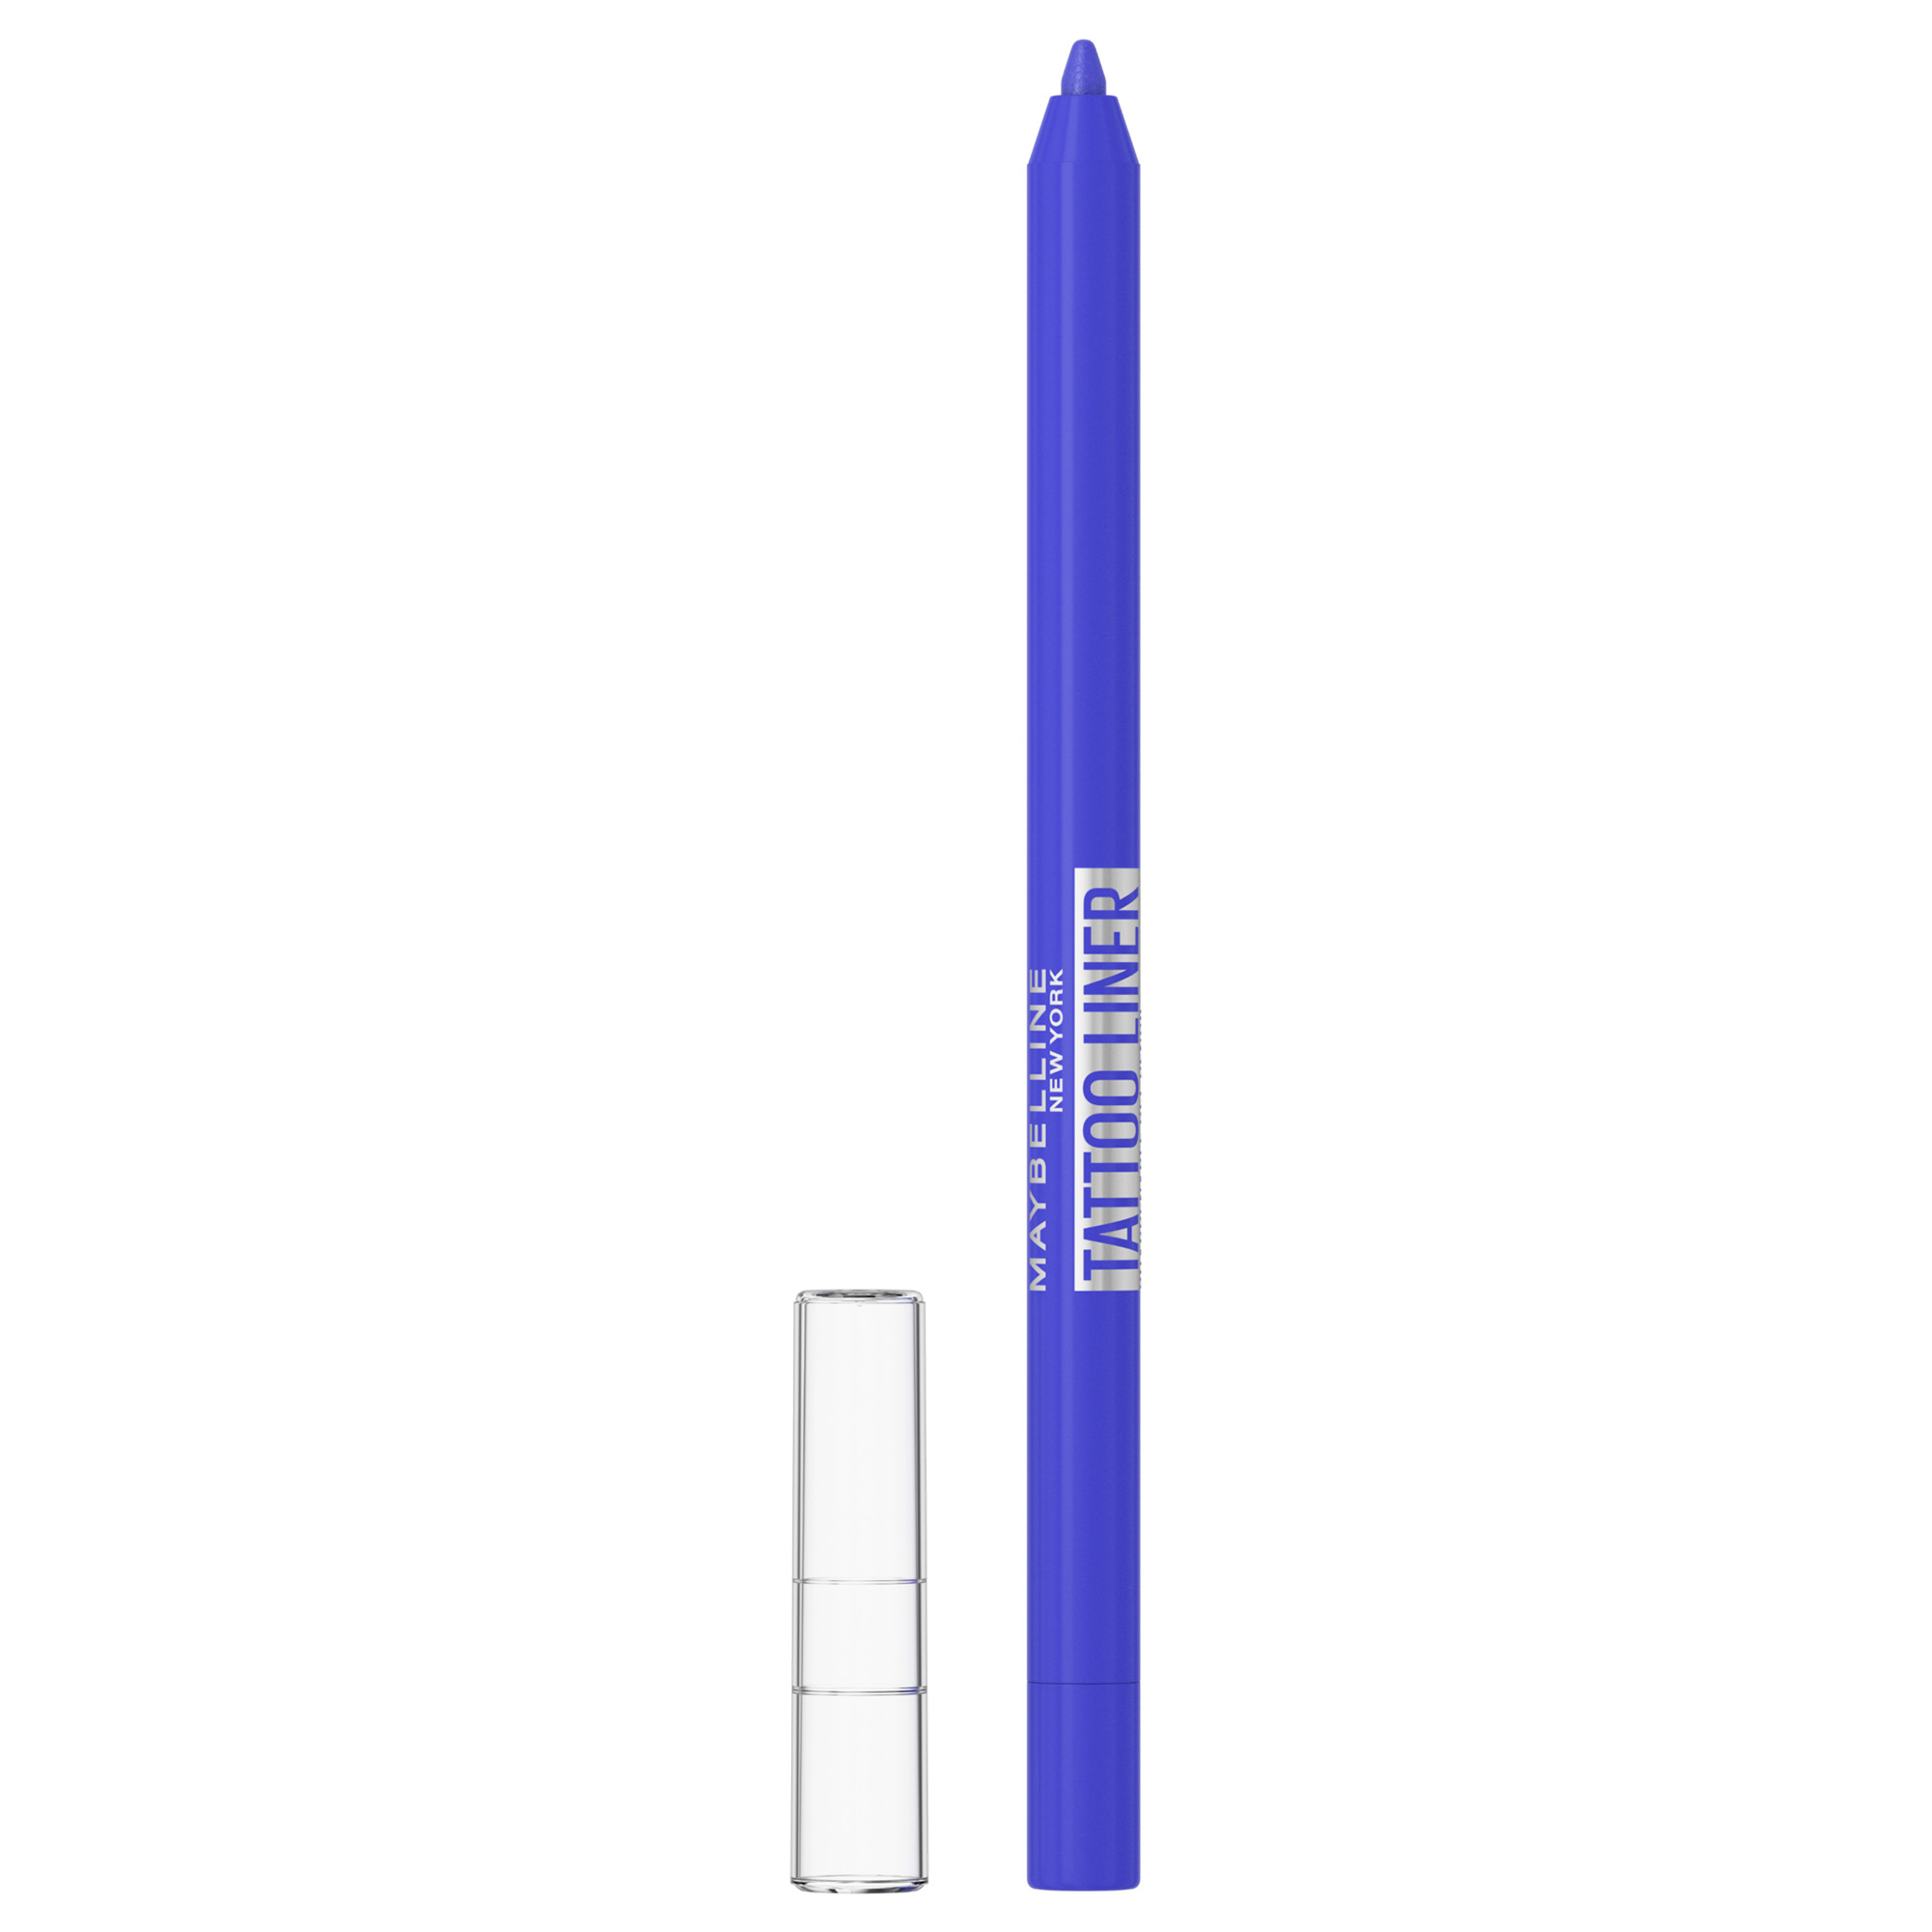 Creion de ochi Tattoo Liner, 819, Galatctic Cobalt, 1.3 g, Maybelline